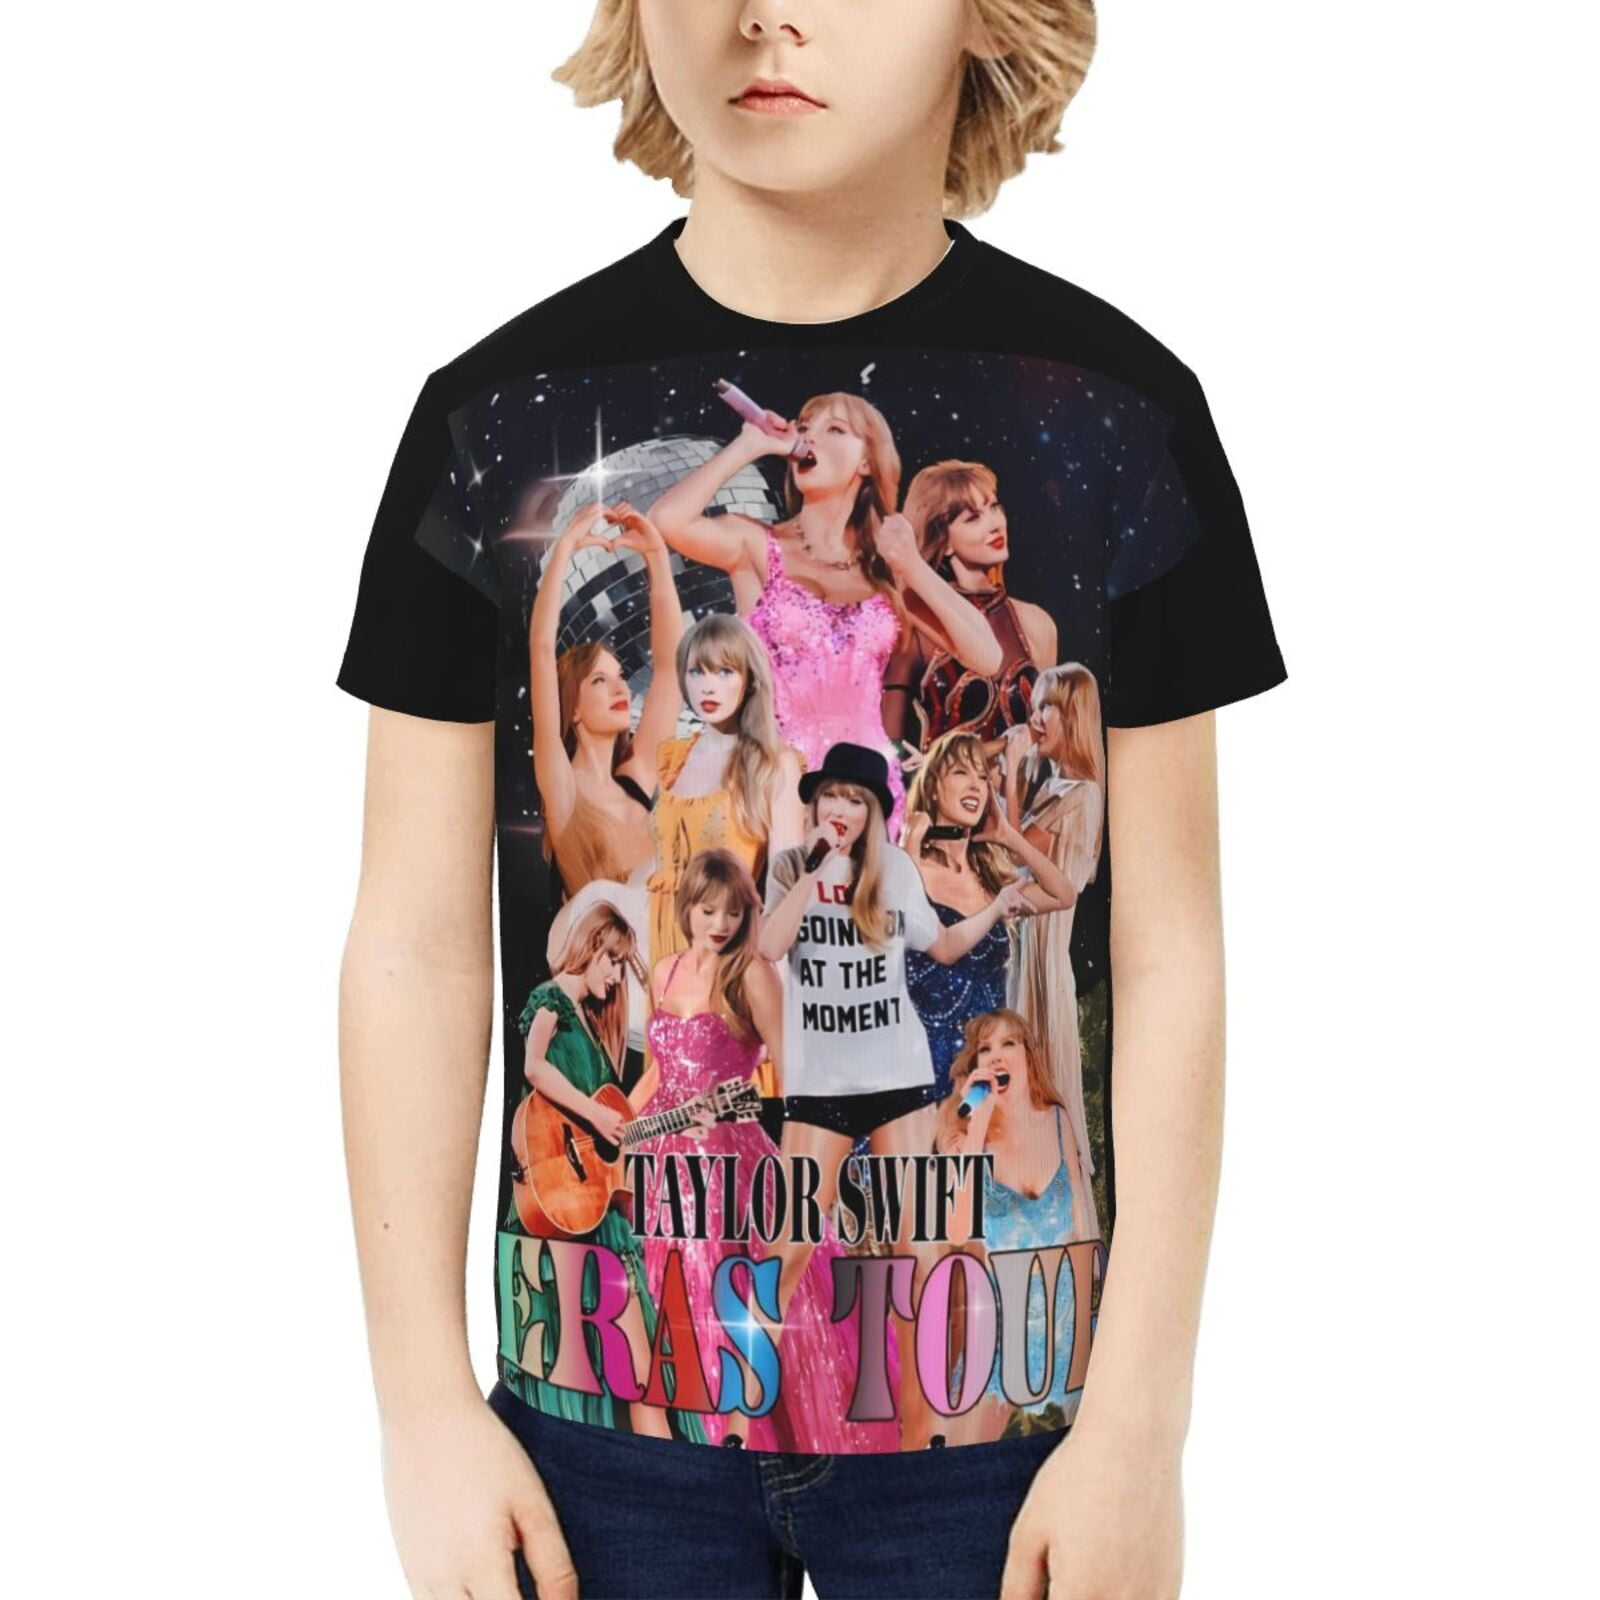 Taylor Swift The Eras Tour Clothes for Girls Short Sleeve T-shirt Kids  Summer Casual Tops Junior Boys Children's Christmas Tee - AliExpress